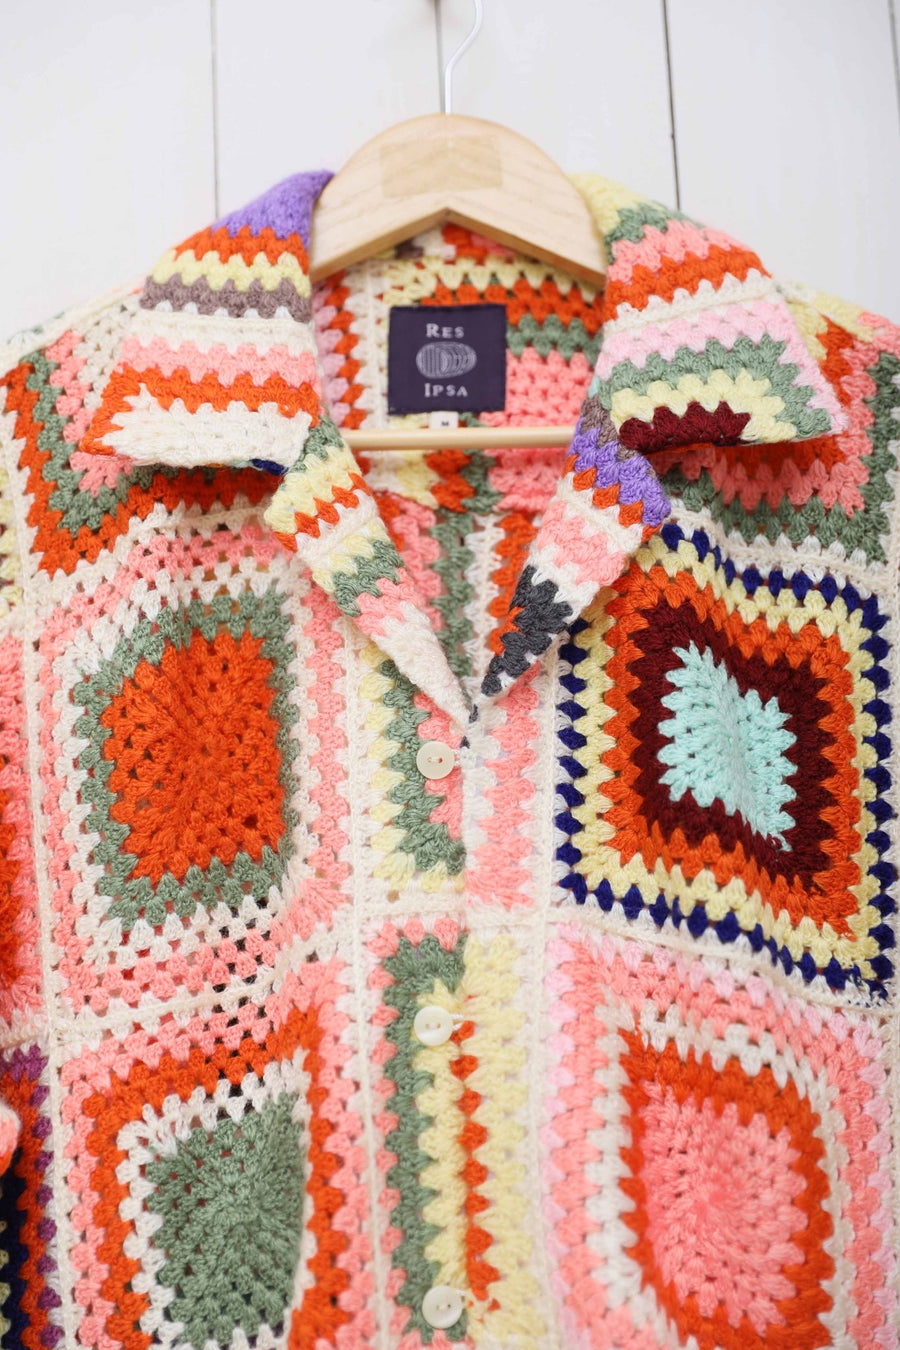 Crochet Camp Shirt #6 - RES IPSA